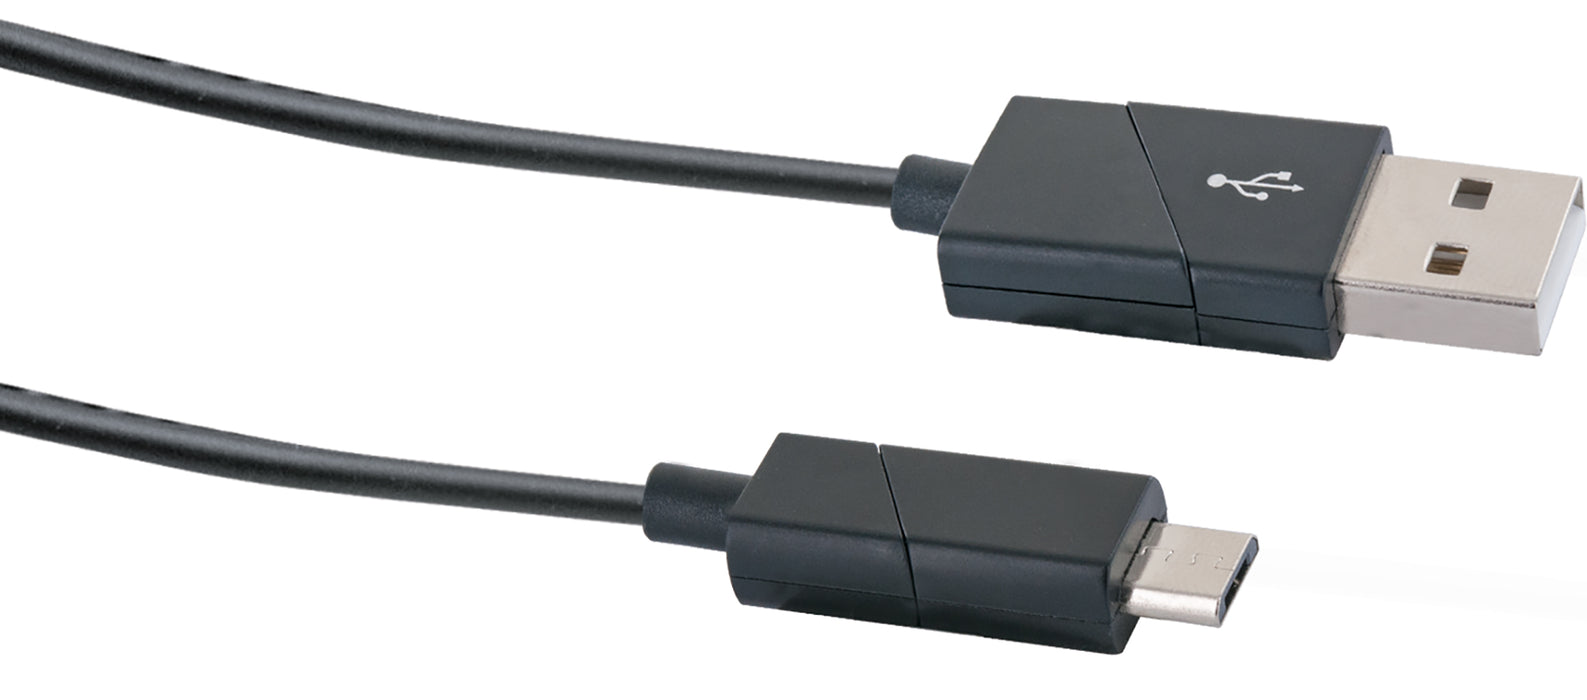 Micro USB sync & charging cable, rotatable